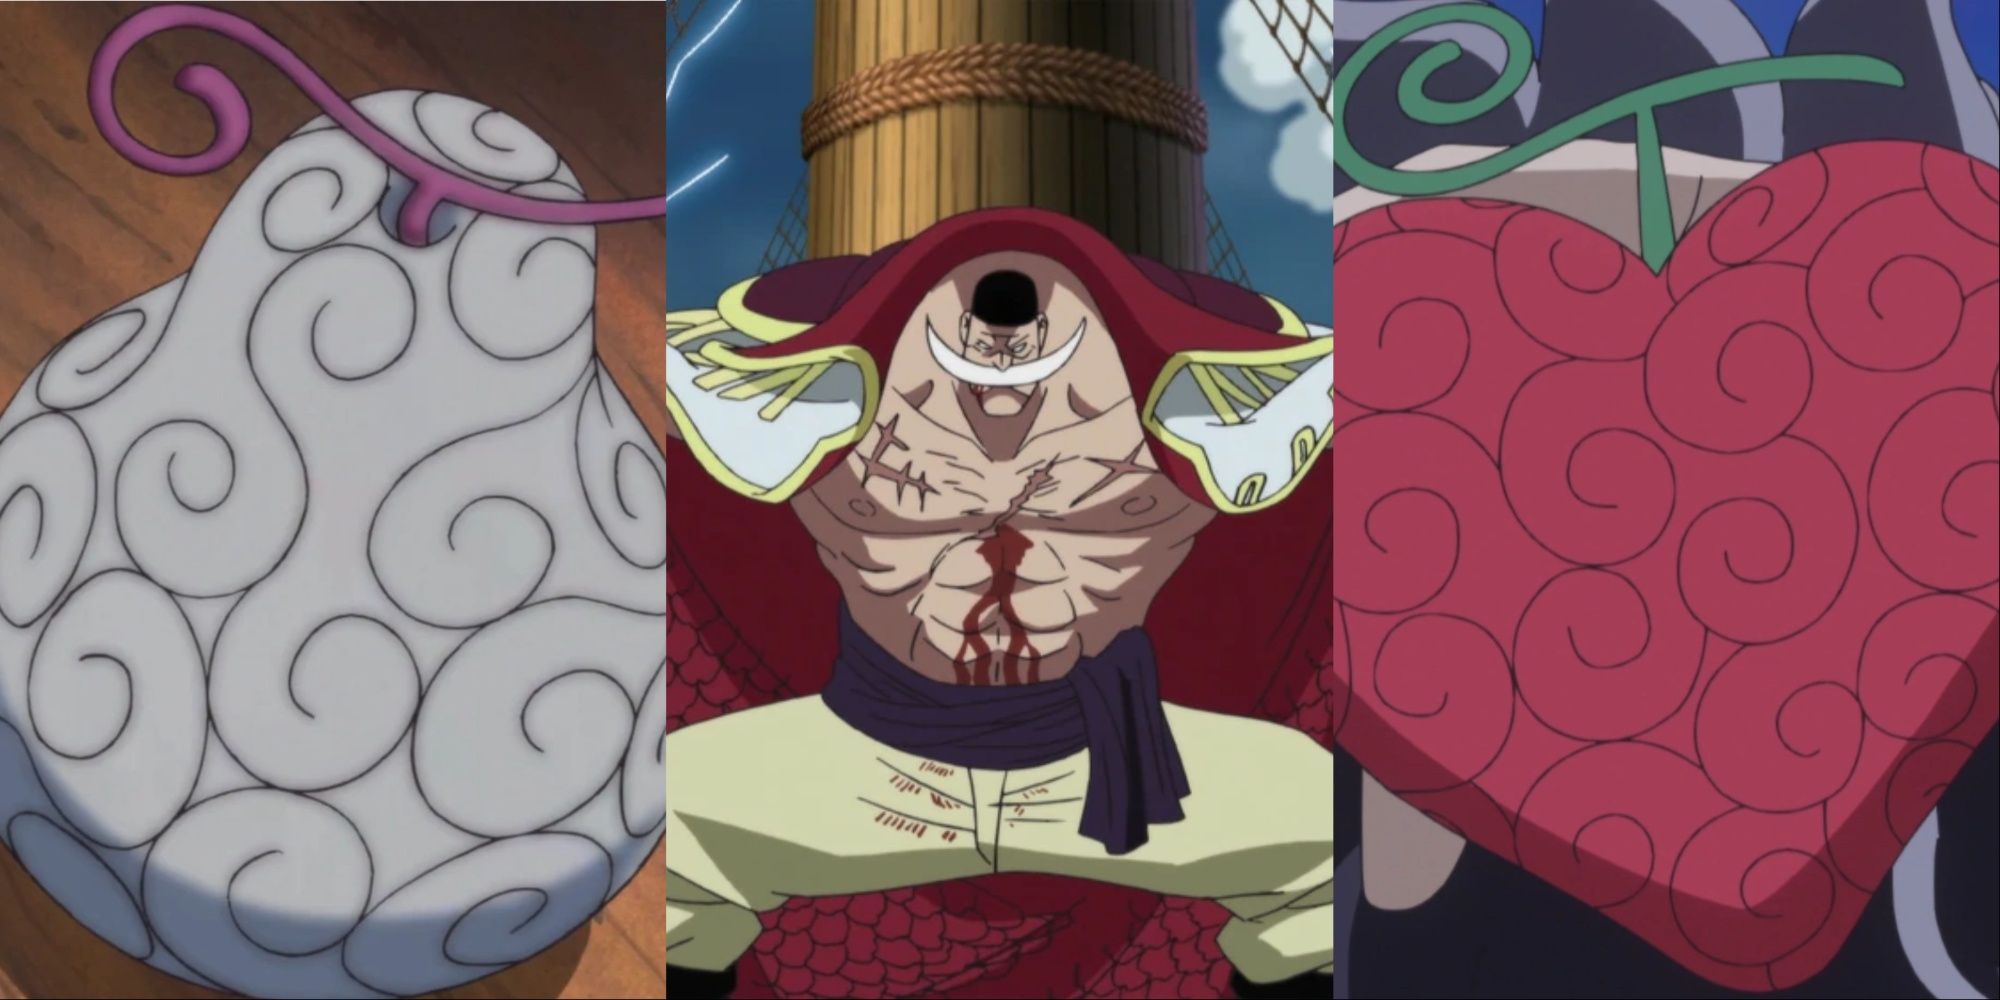 Das Ito Ito no Mi, Ope Ope no Mi und Whitebeard aus One Piece.